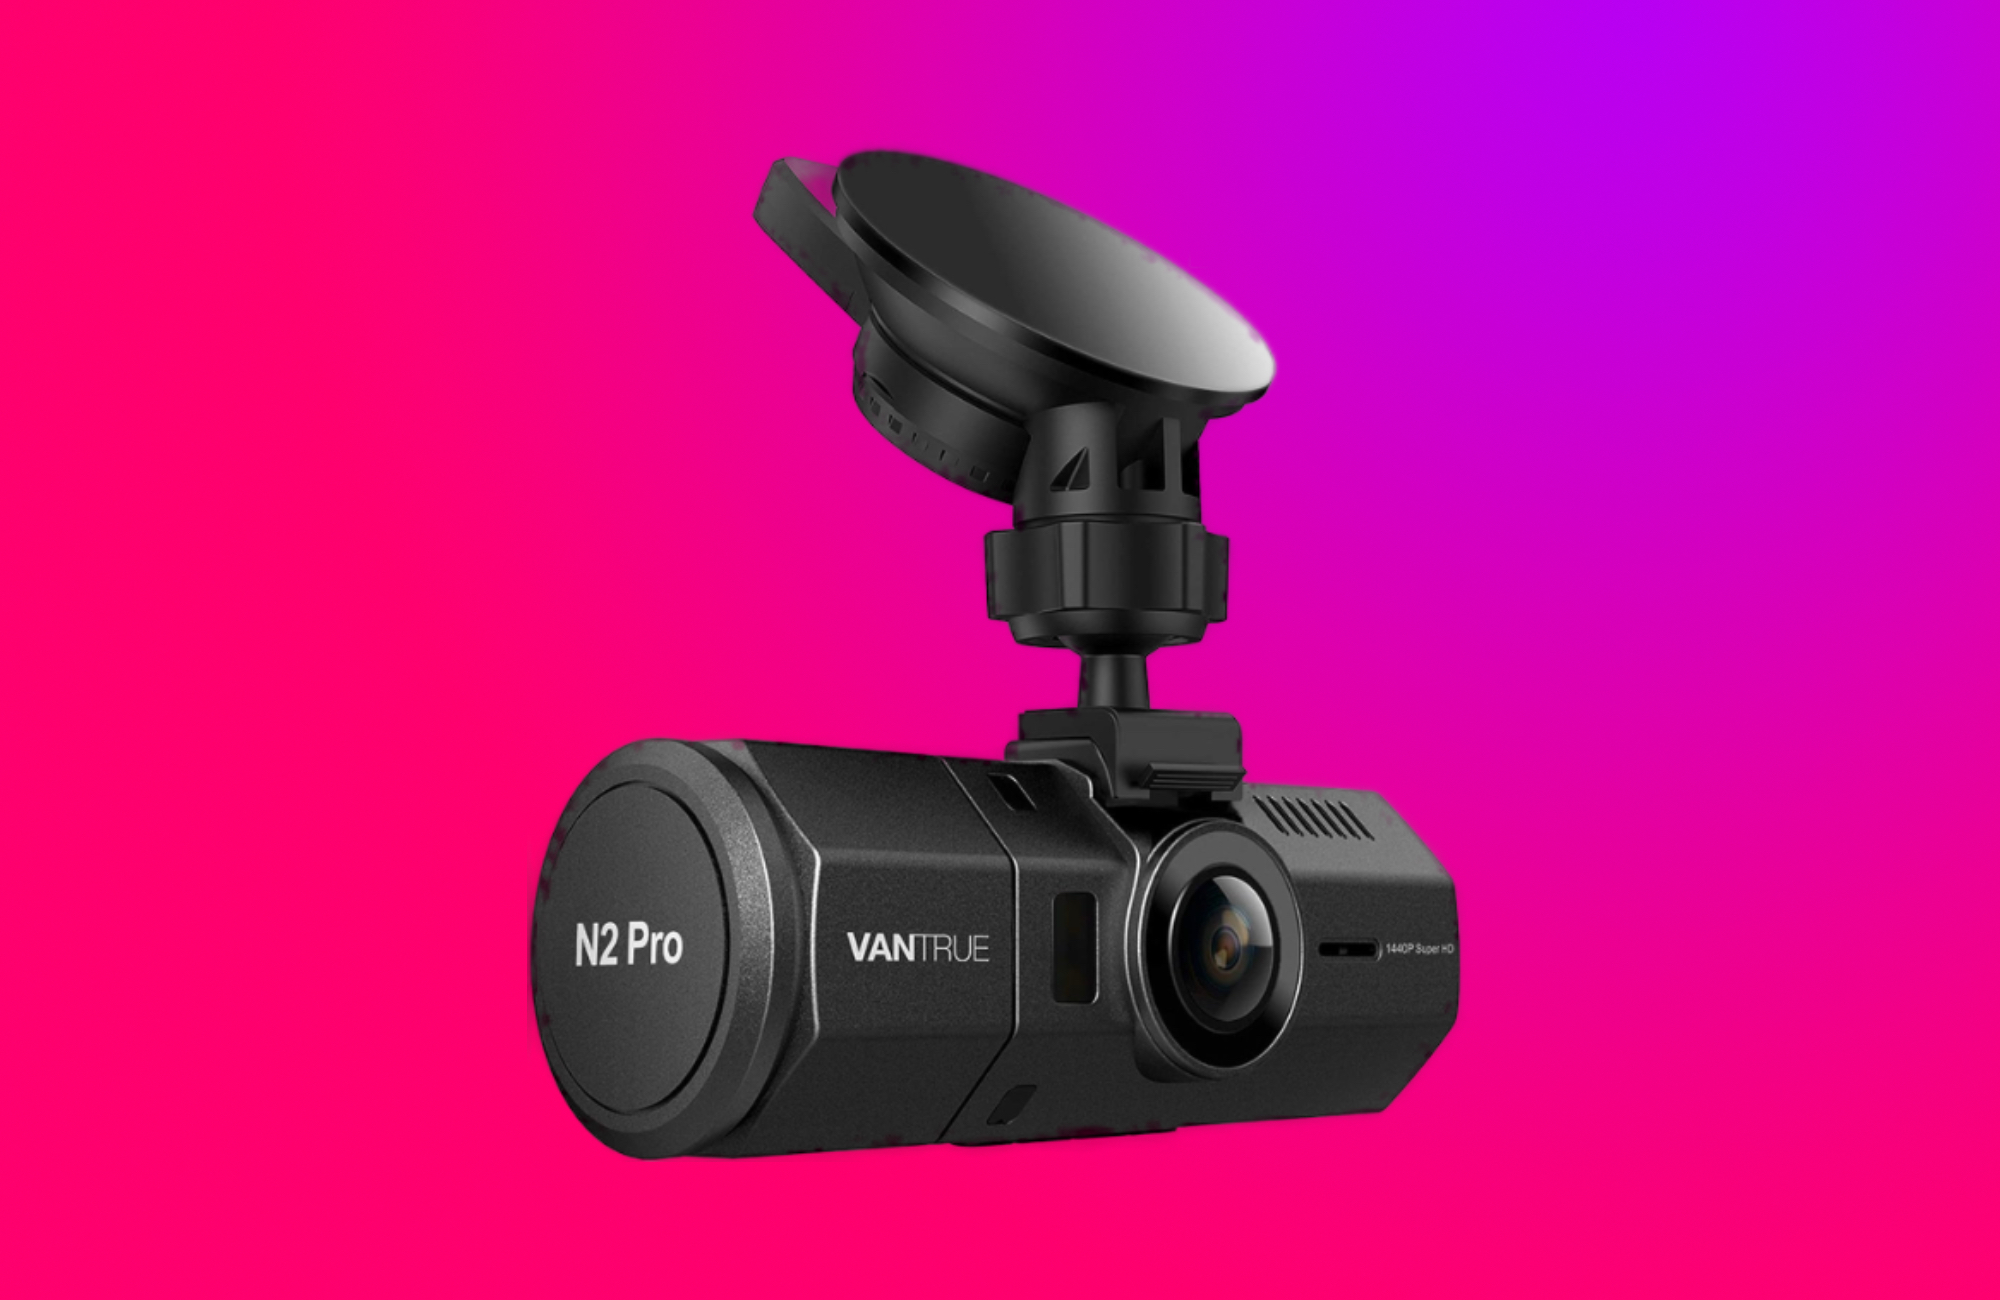 AI-Powered Dash Cams : Nexar One dash cam